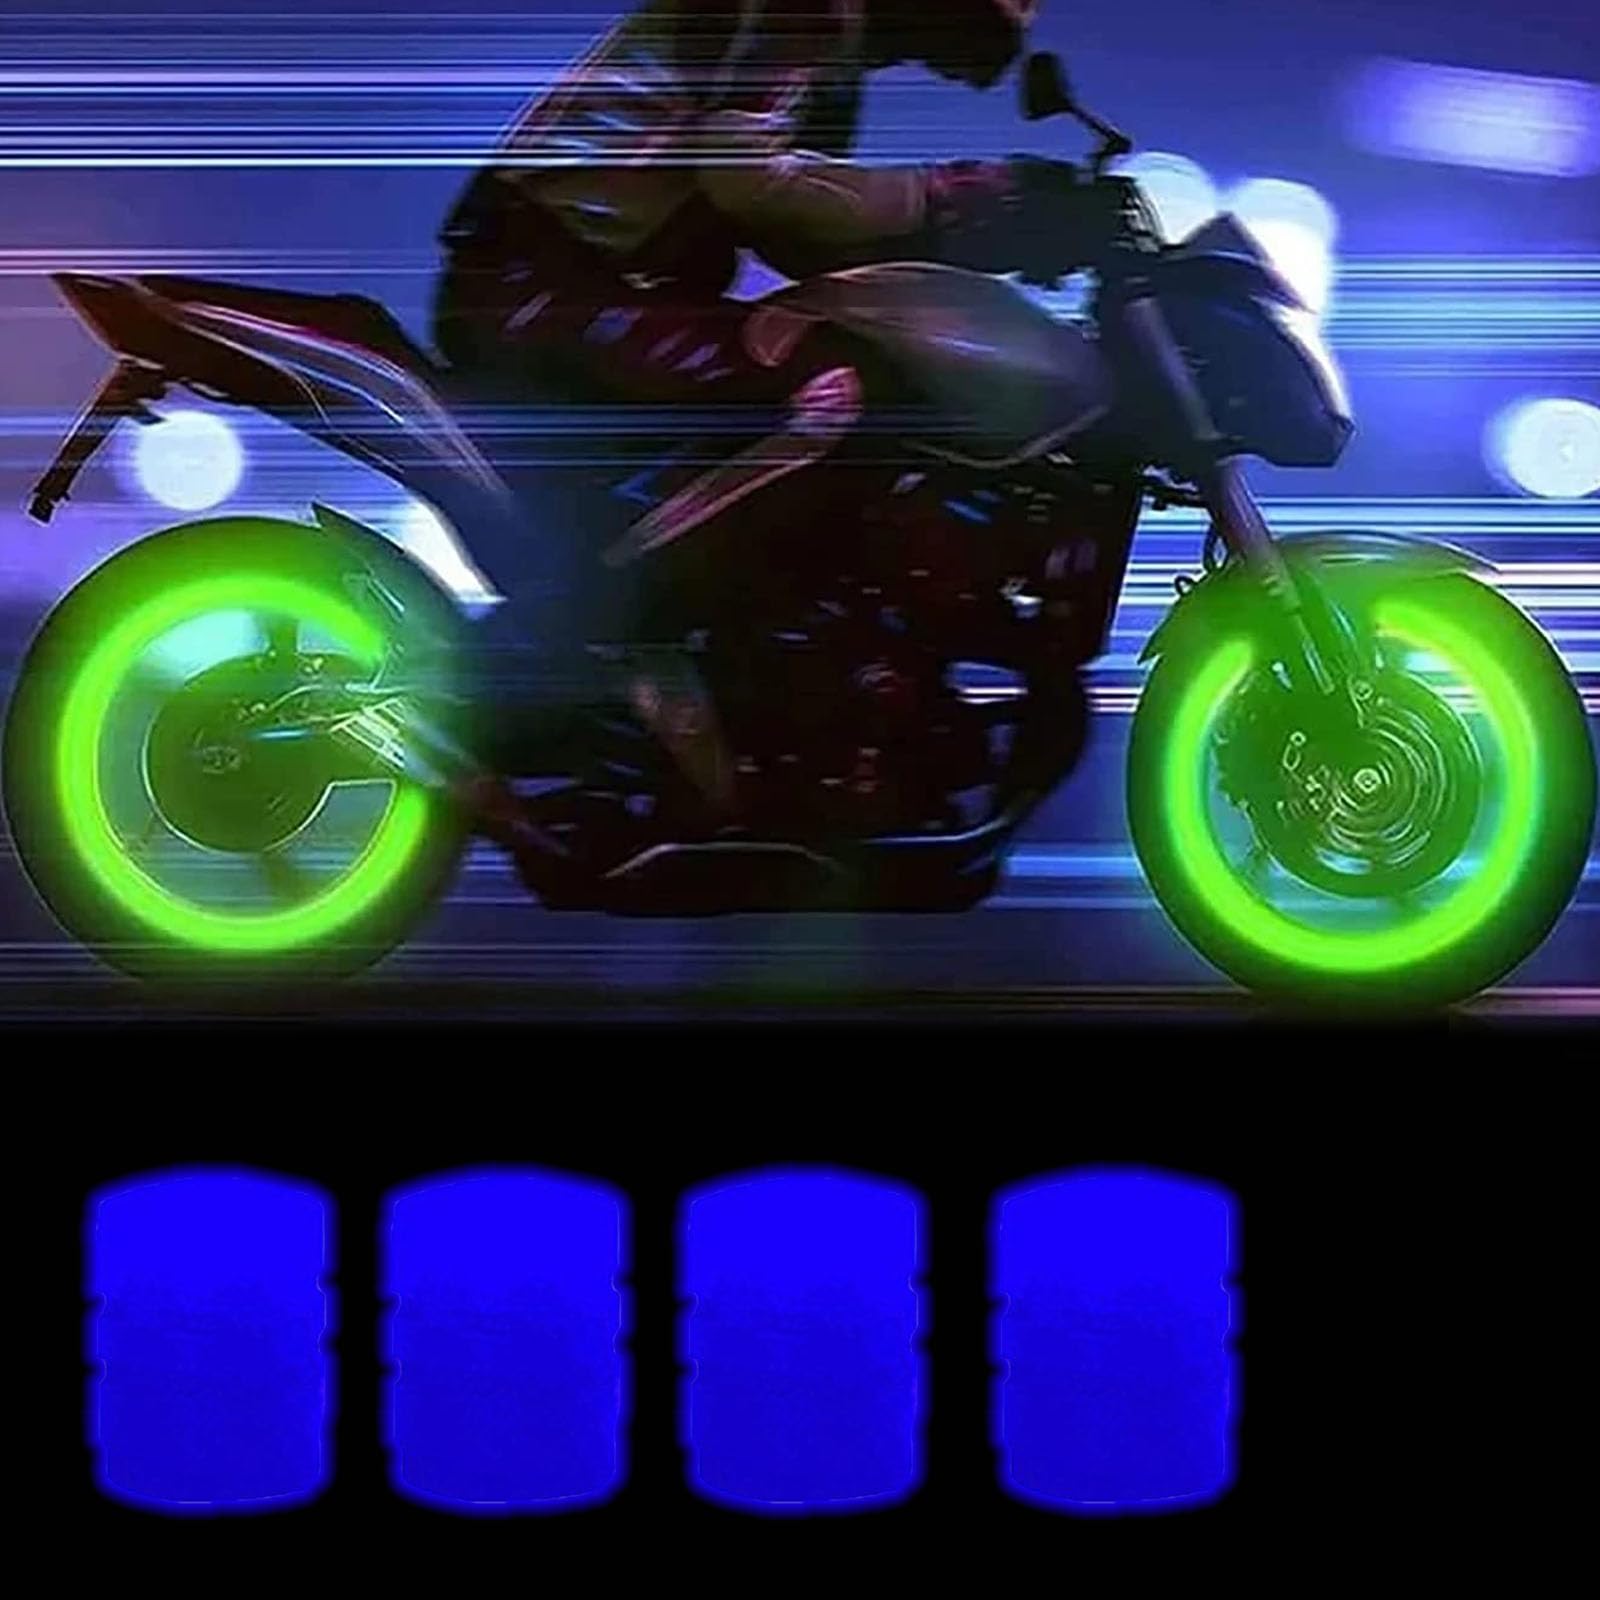 Donubiiu Glow In The Dark Tire Valve Caps, Luminous Car Tire Valve Stem Caps, Light Up Tire Valve Caps, Universal Fluorescent Glowing Valve Caps for Cars, Bicycle, Trucks, SUV, Motorbike (4pcs Blue) von Donubiiu